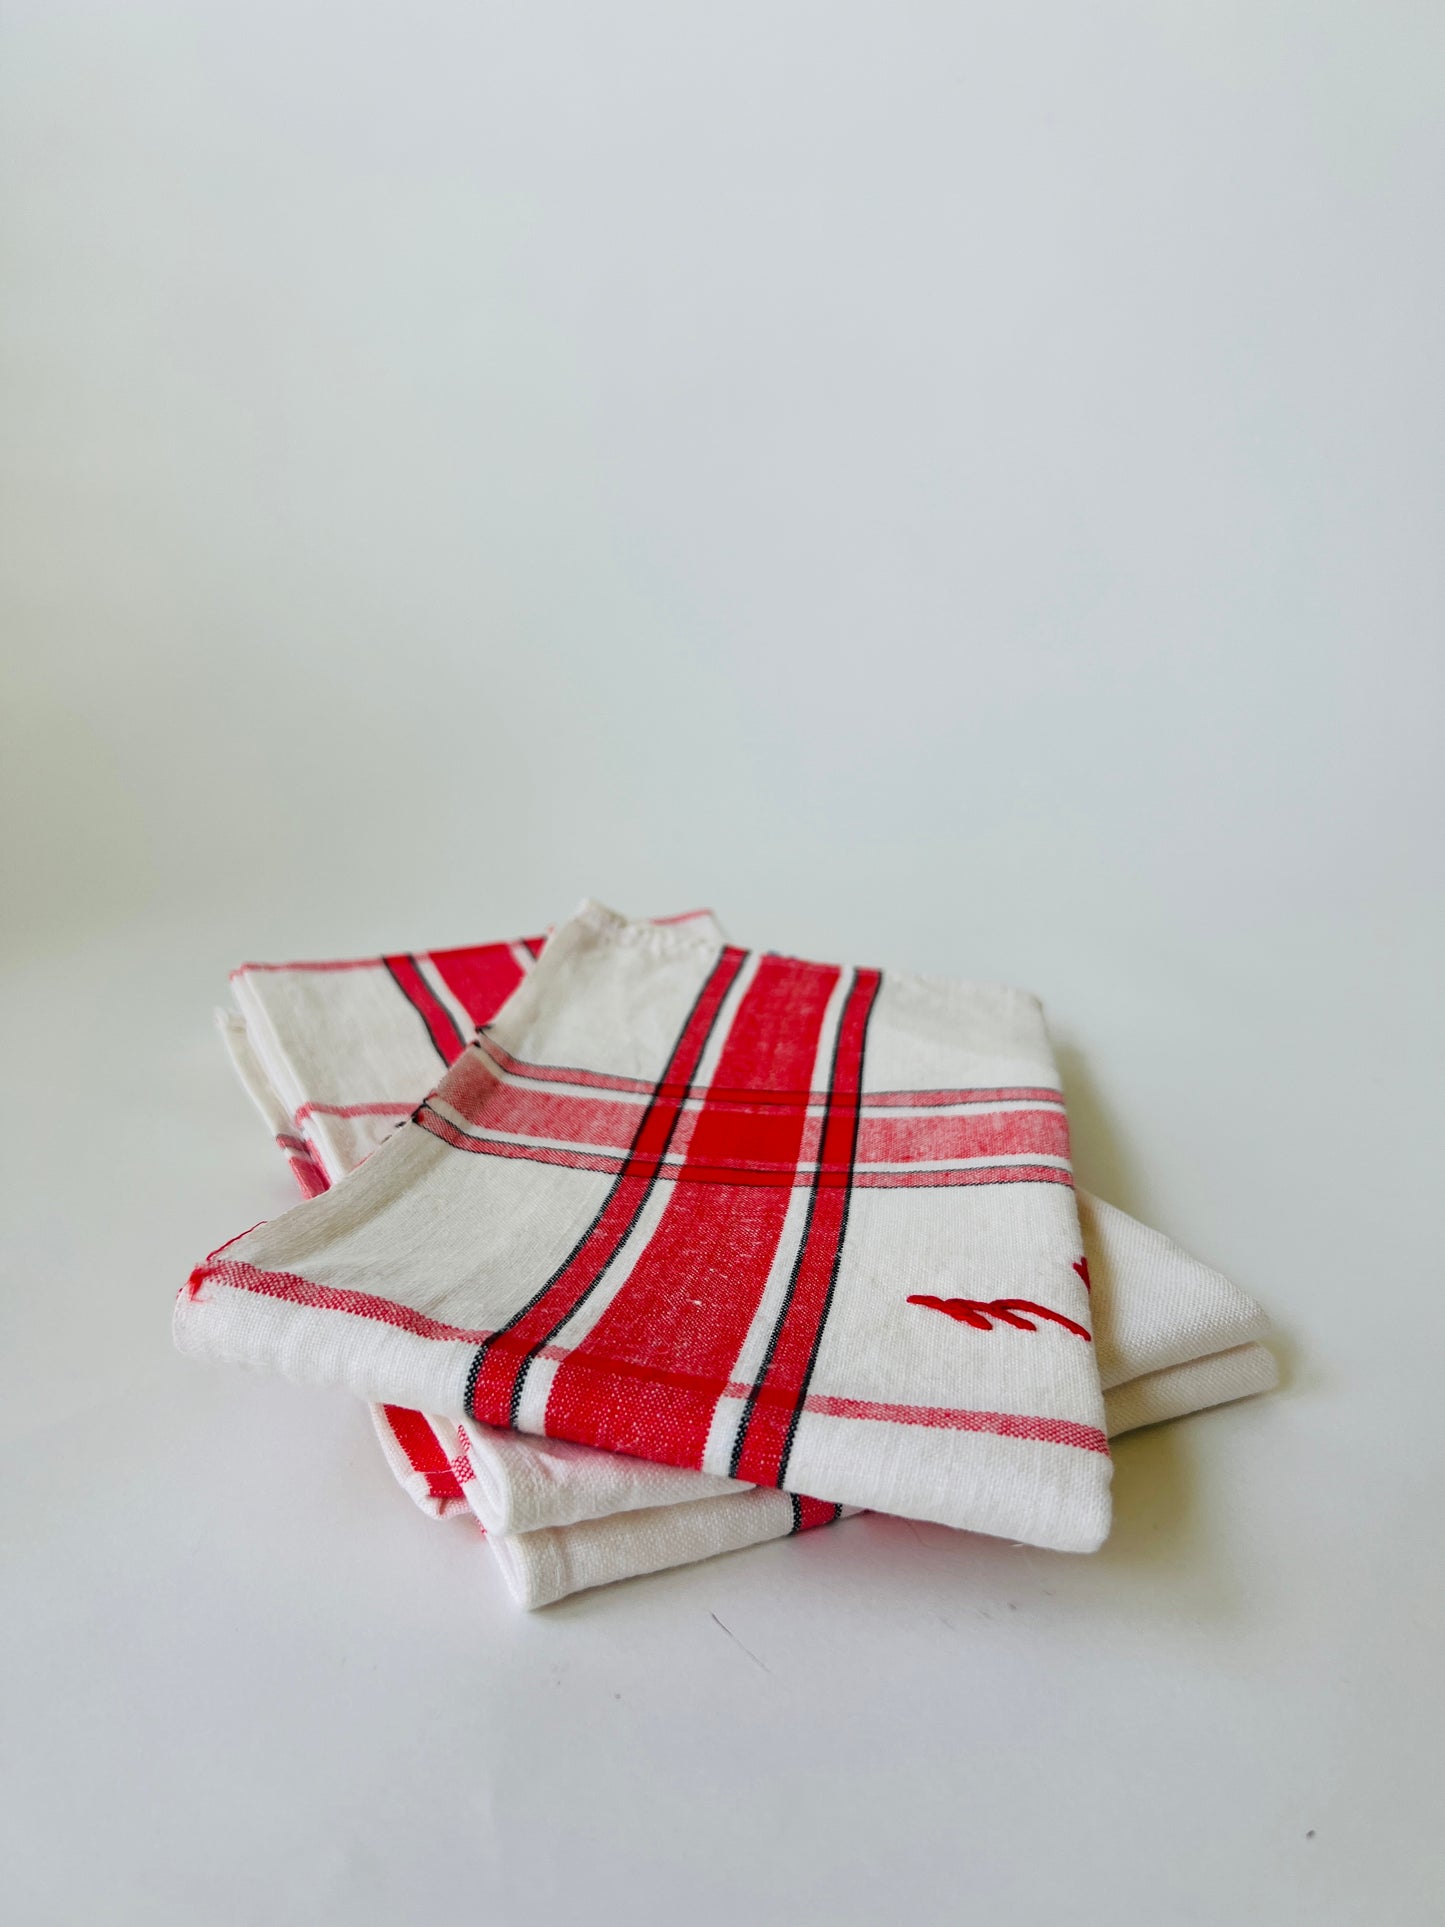 Vintage French Tea Towels